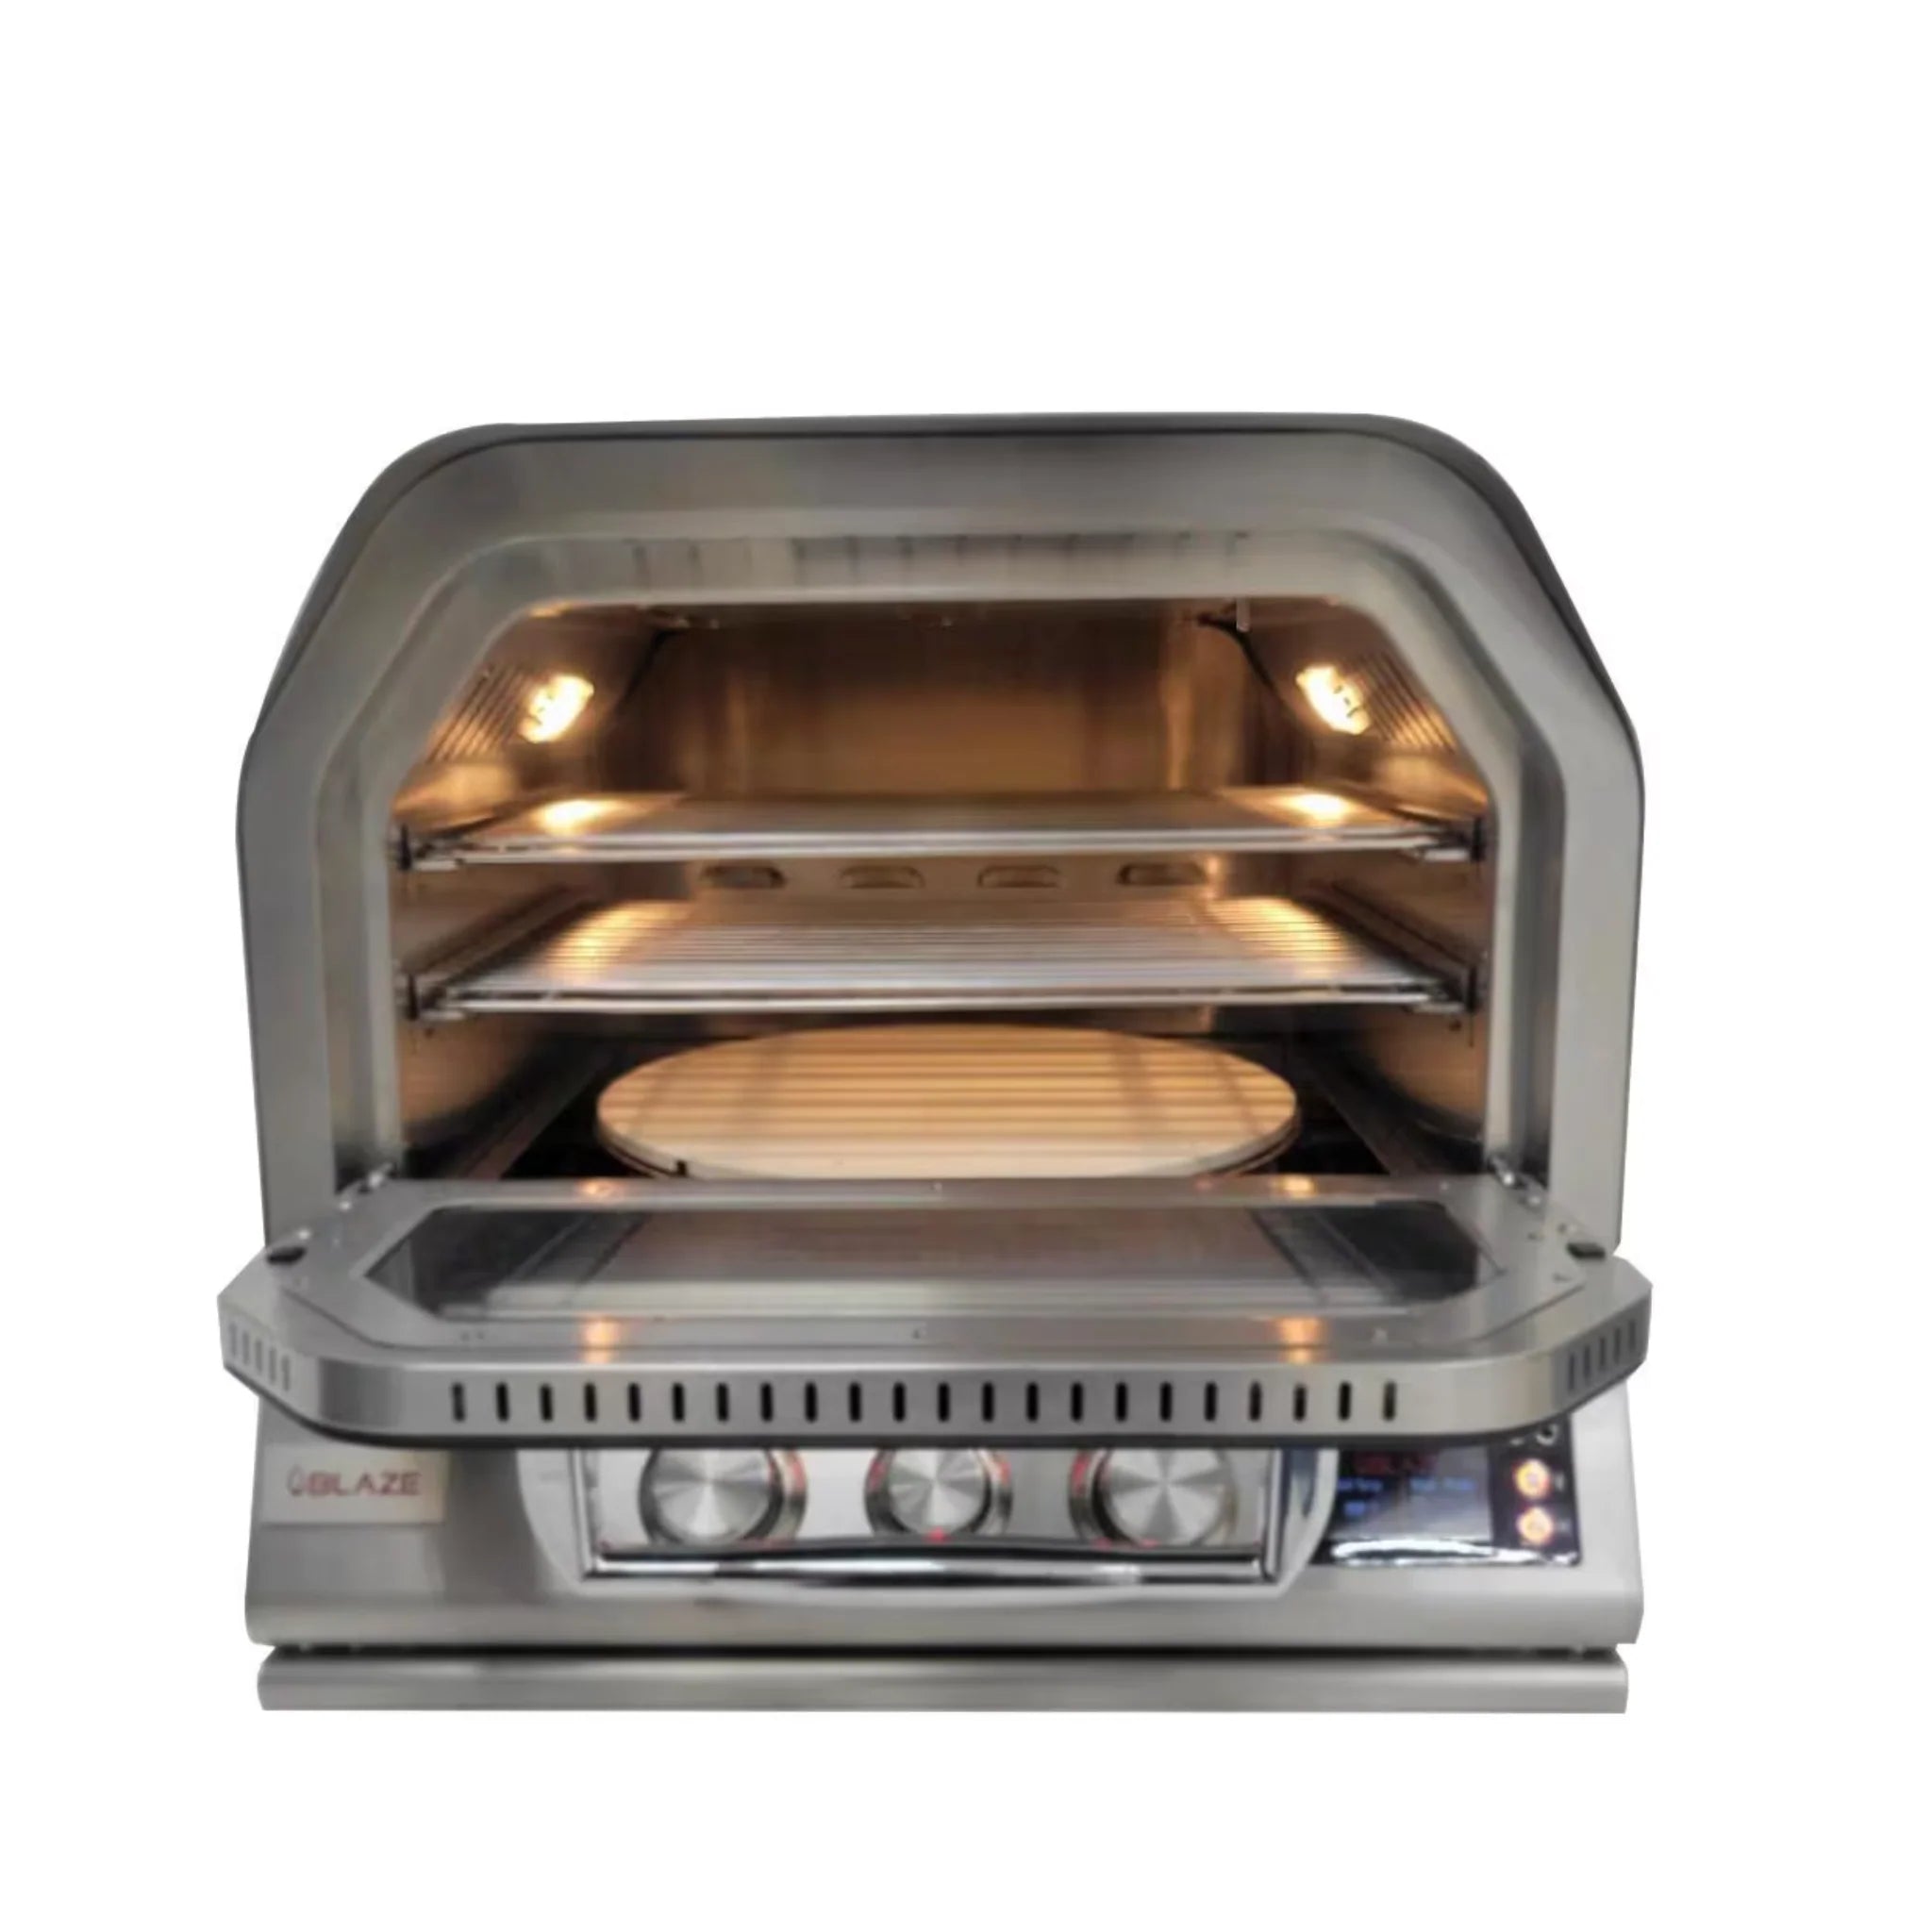 Blaze Grills 26-Inch Built-In Stainless Steel Gas Outdoor Pizza Oven - BLZ-26-PZOVN